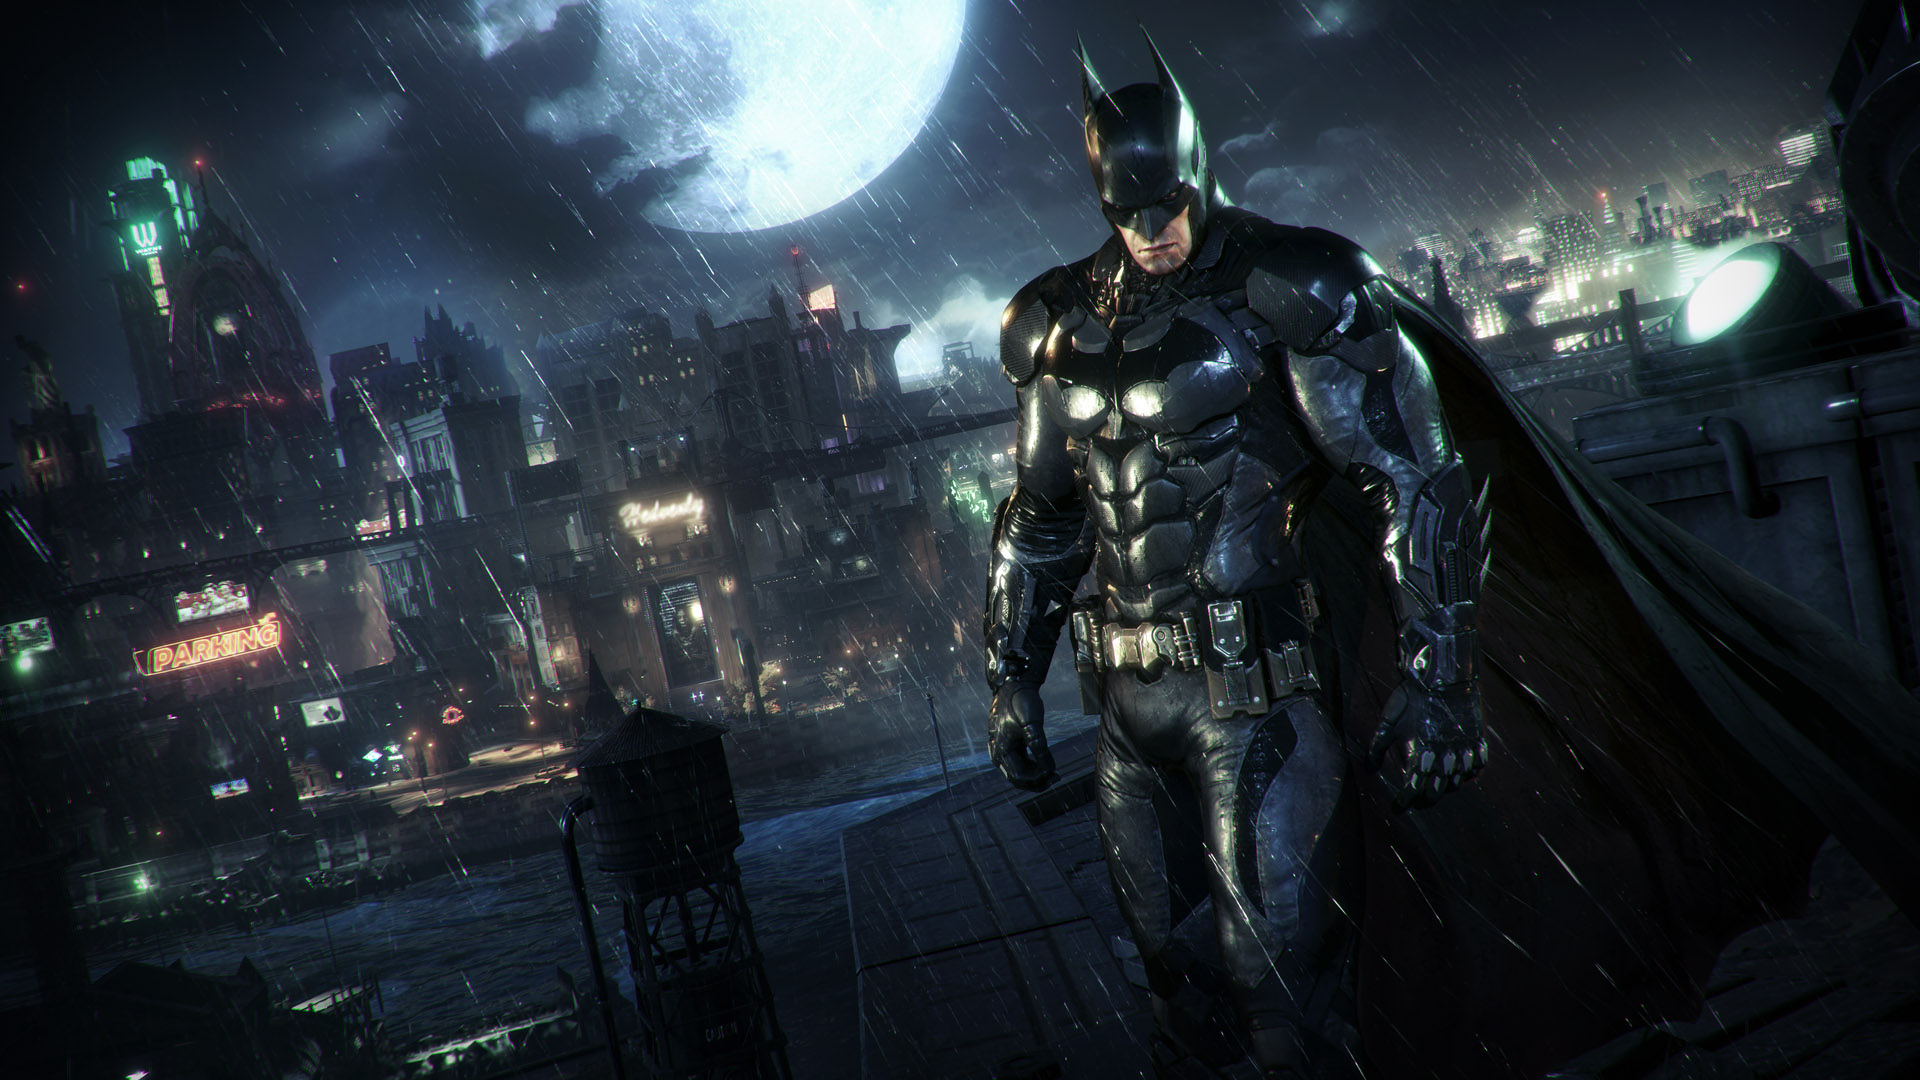  Batman: Arkham Knight HQ Background Images